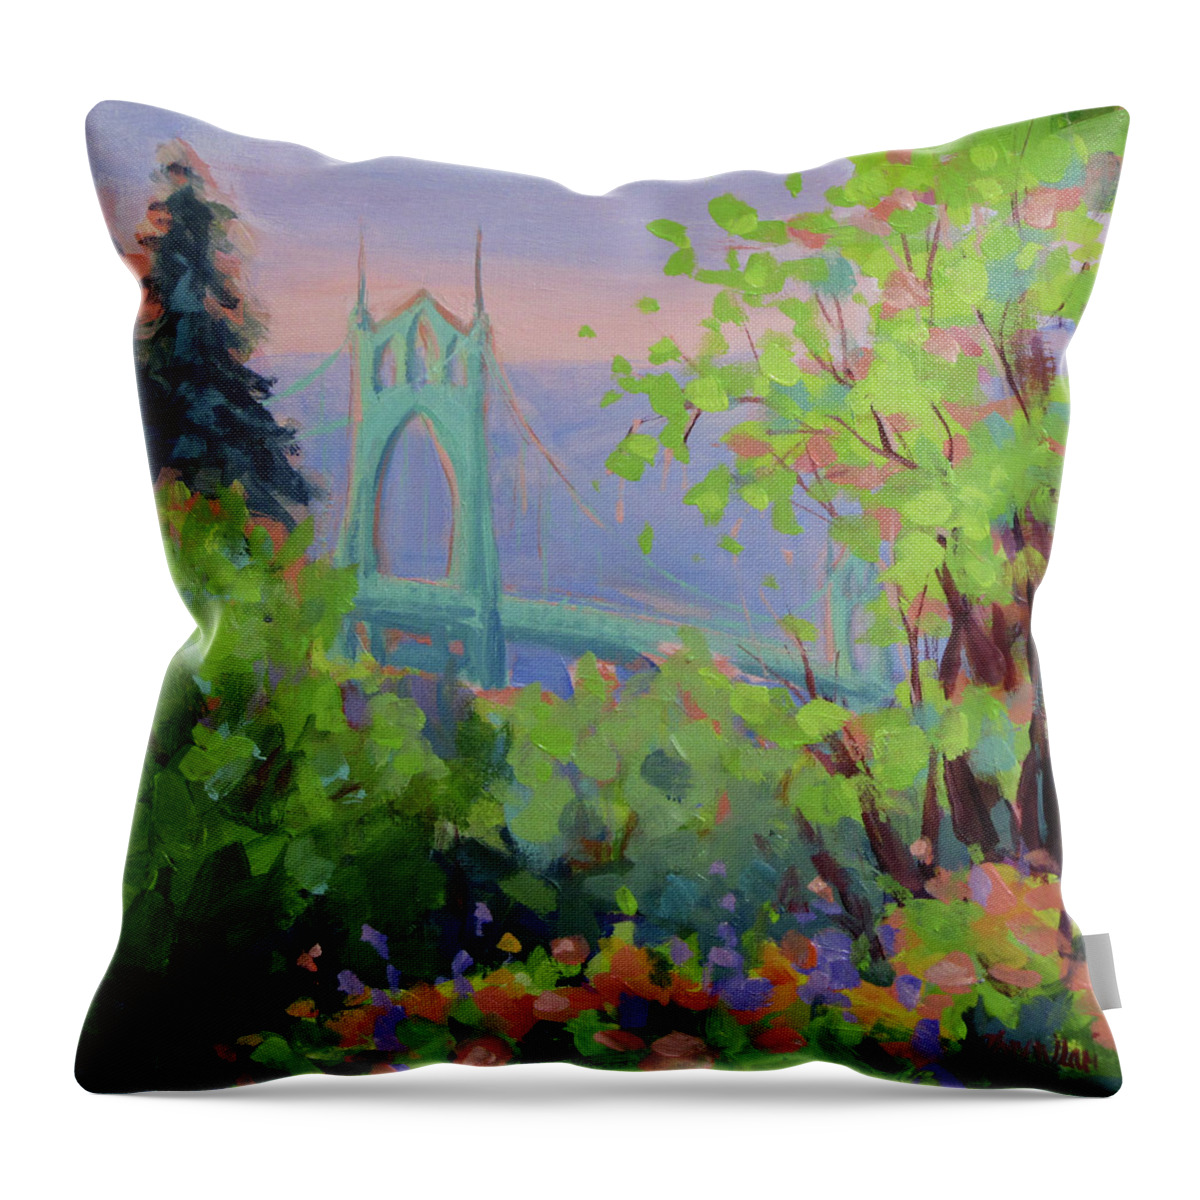 Portland Throw Pillow featuring the painting St Johns by Karen Ilari